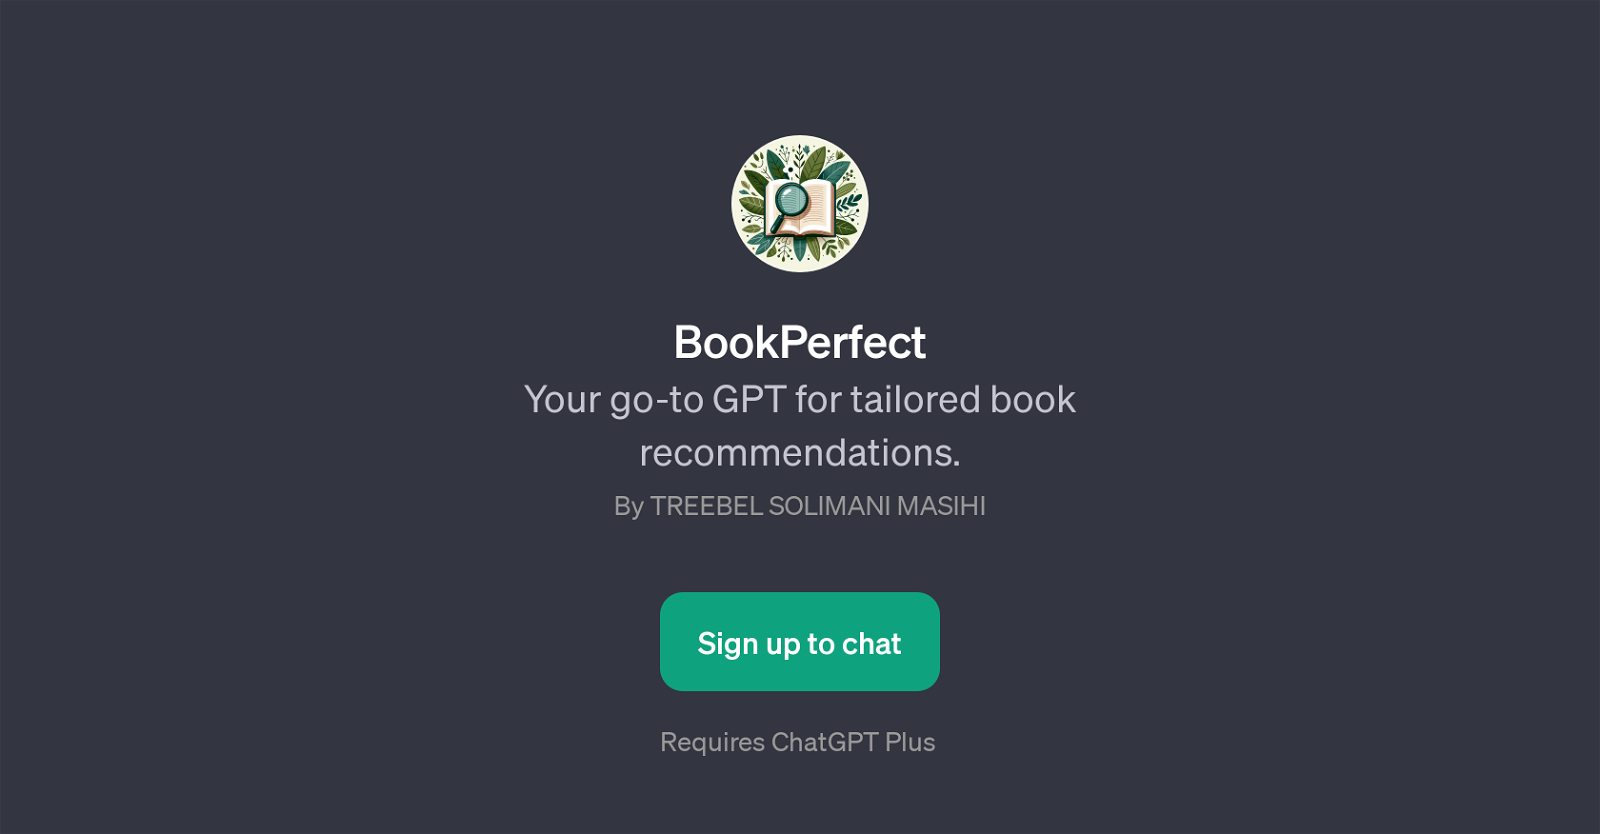 BookPerfect website